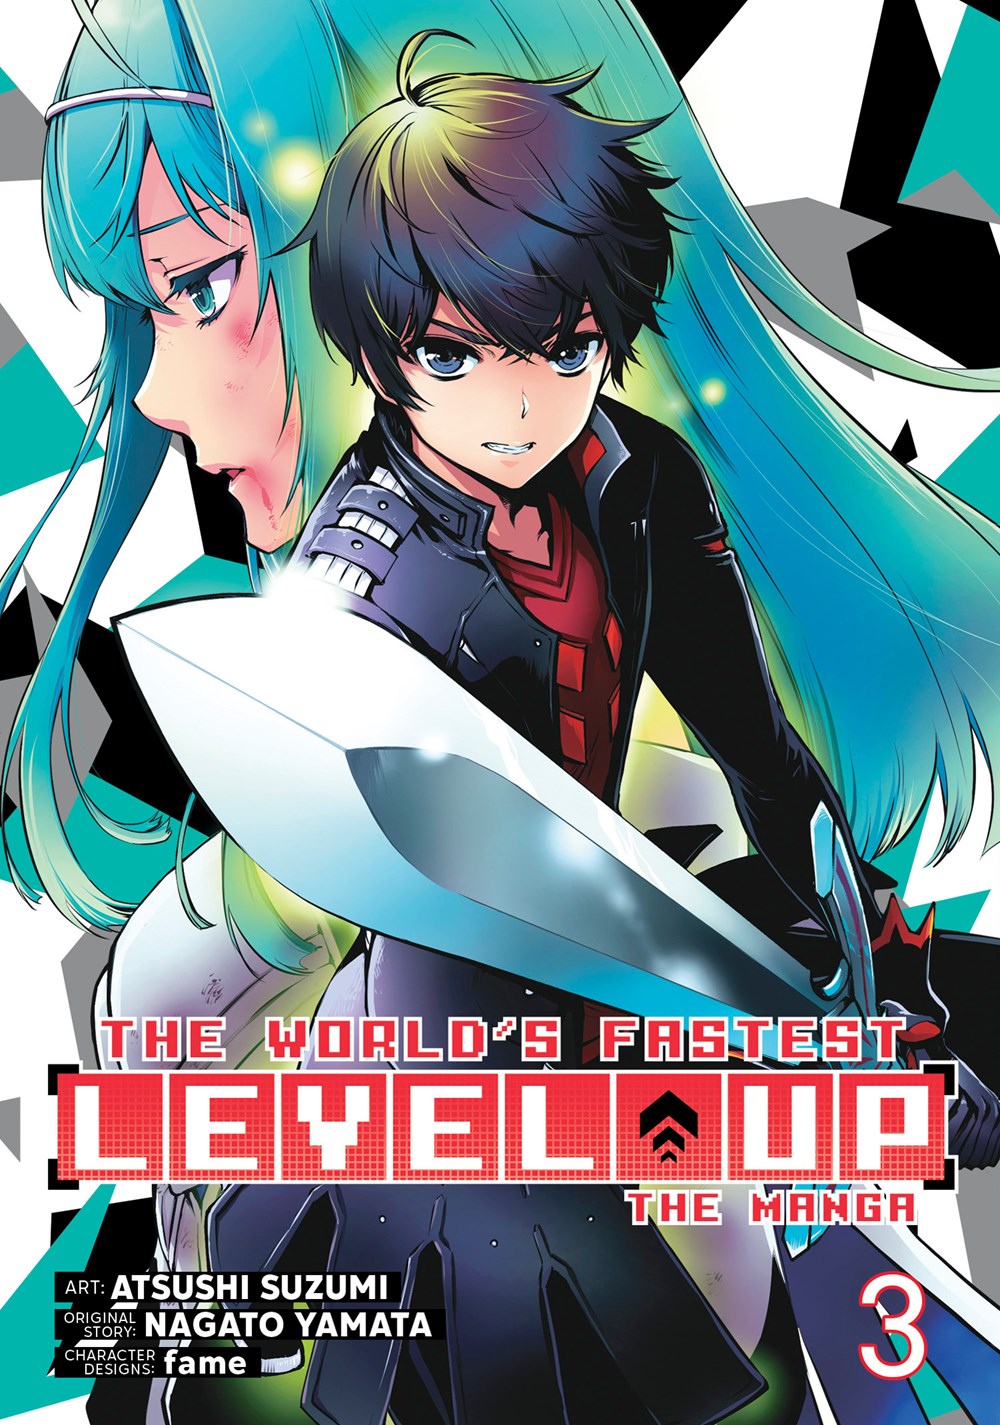 The World's Fastest Level Up (Light Novel) Vol. 2 by Nagato Yamata |  Goodreads